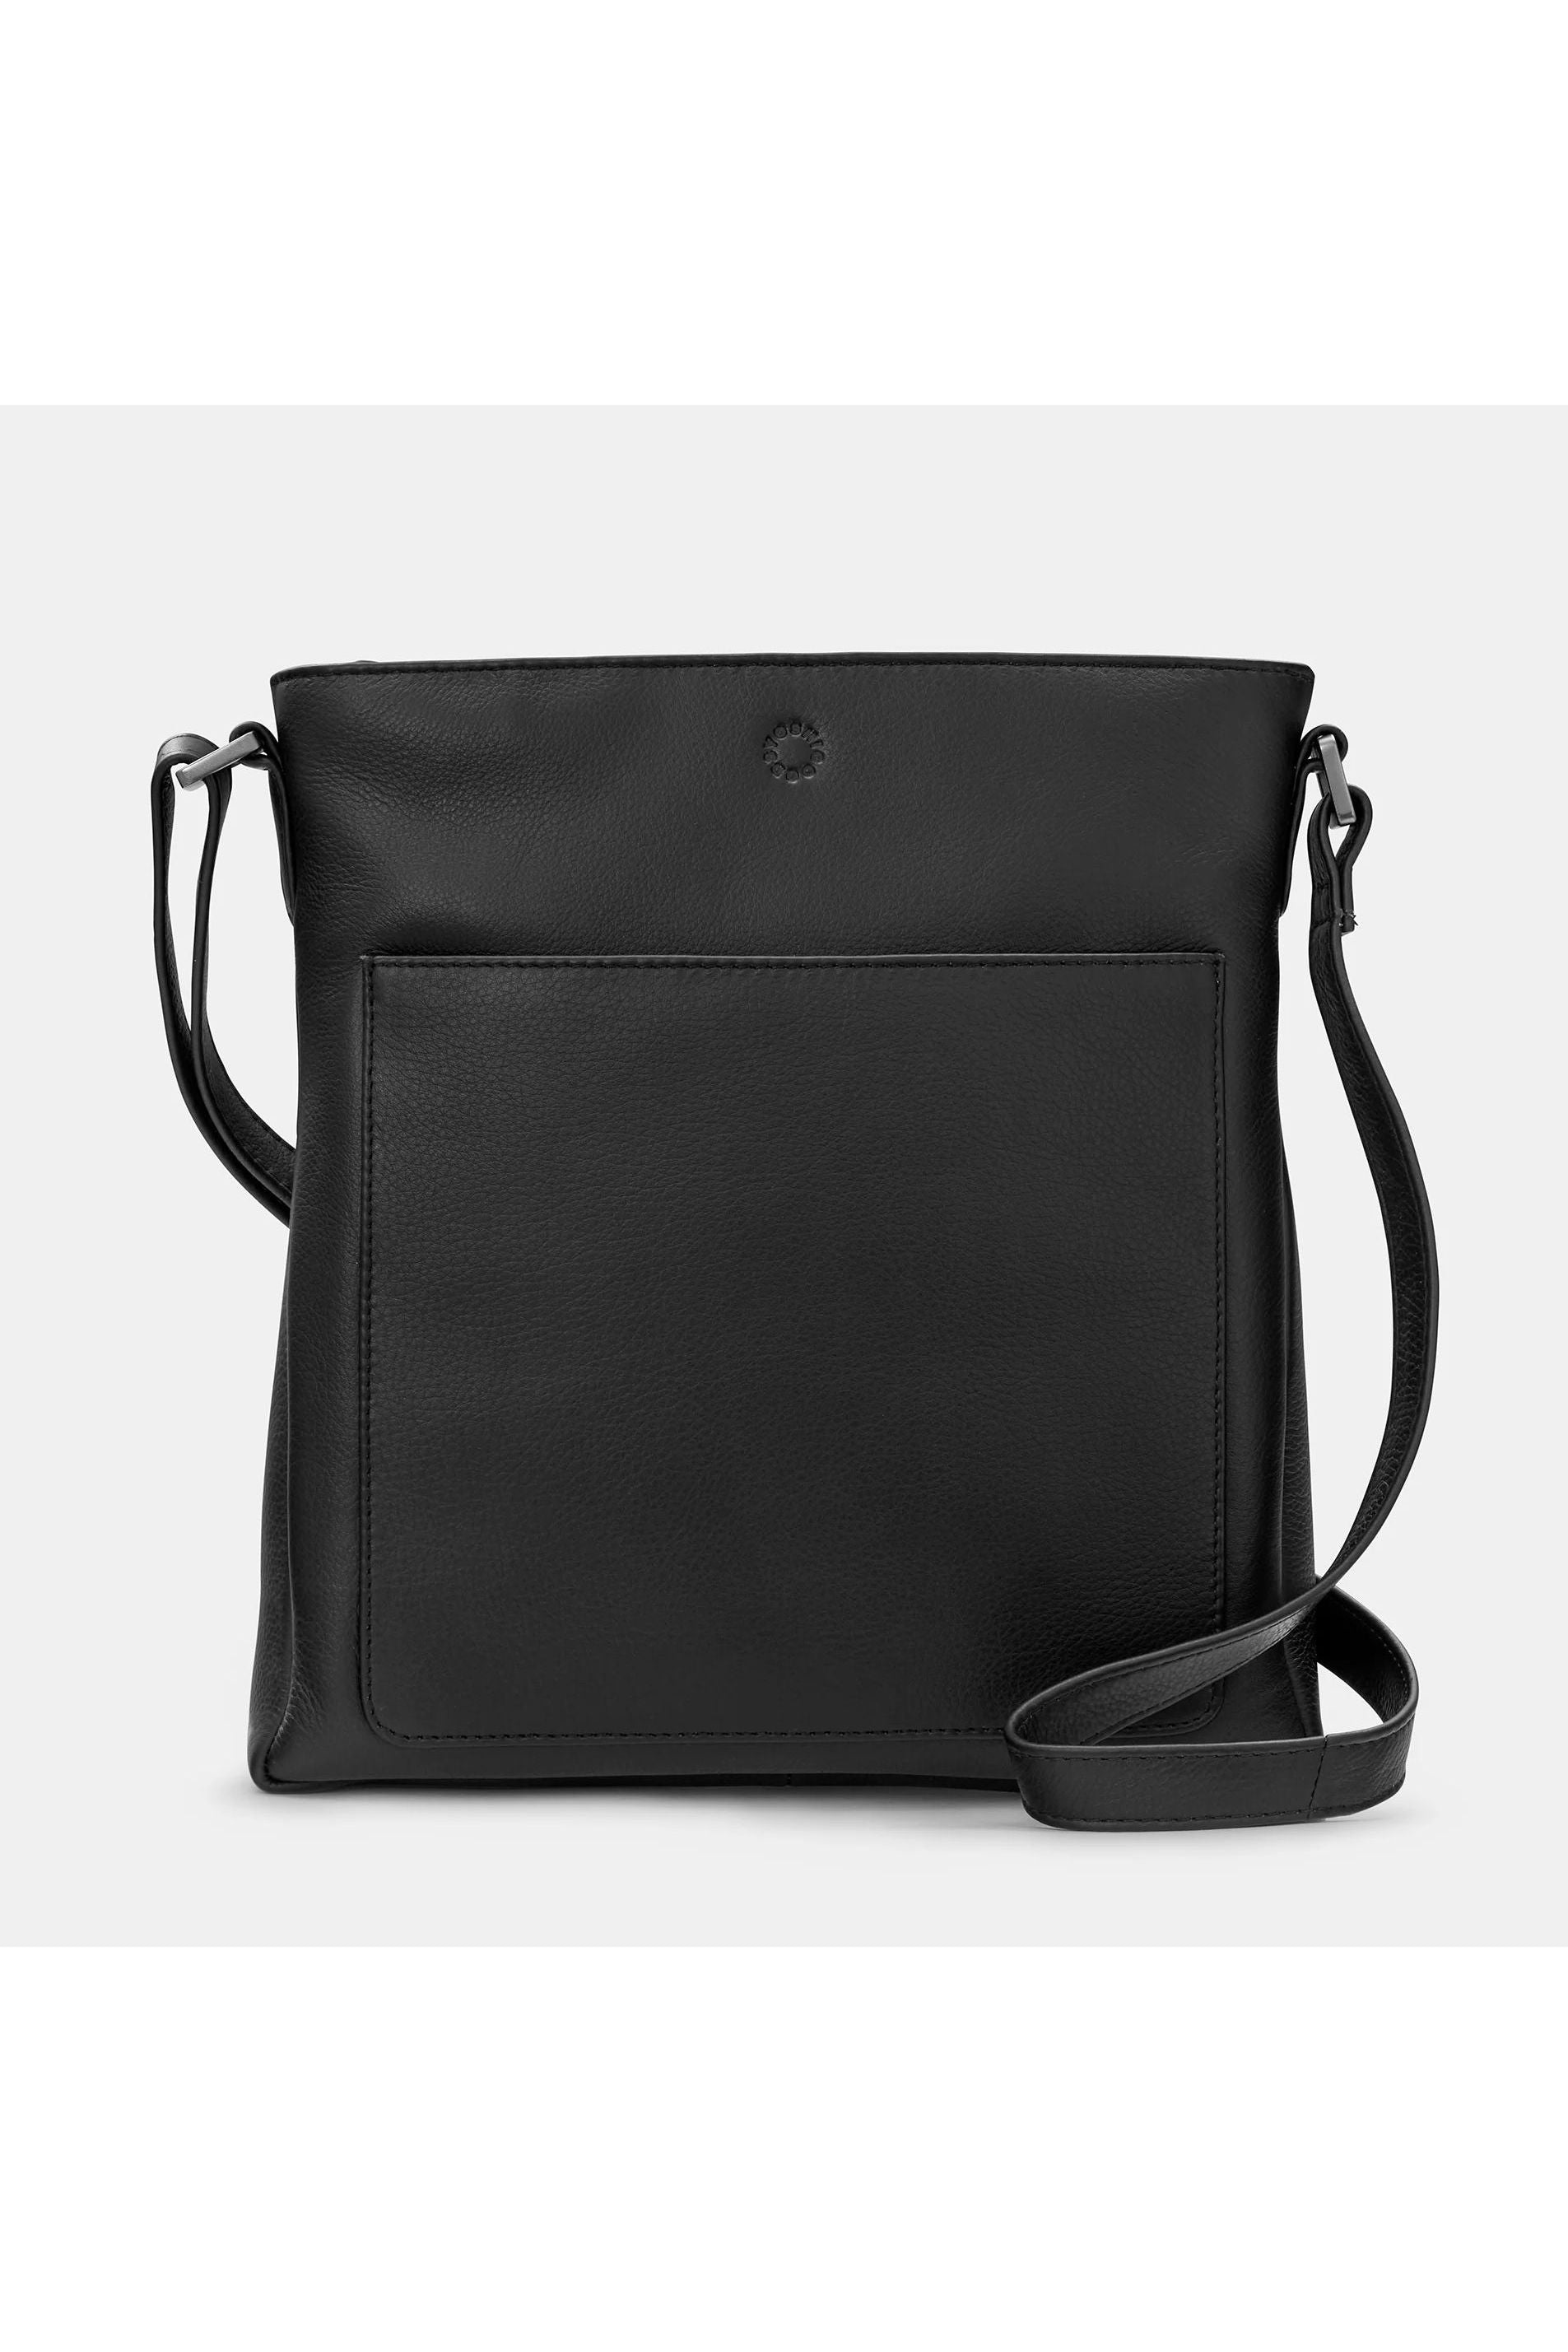 Yoshi Byrant Leather Cross Body Handbag in black leather